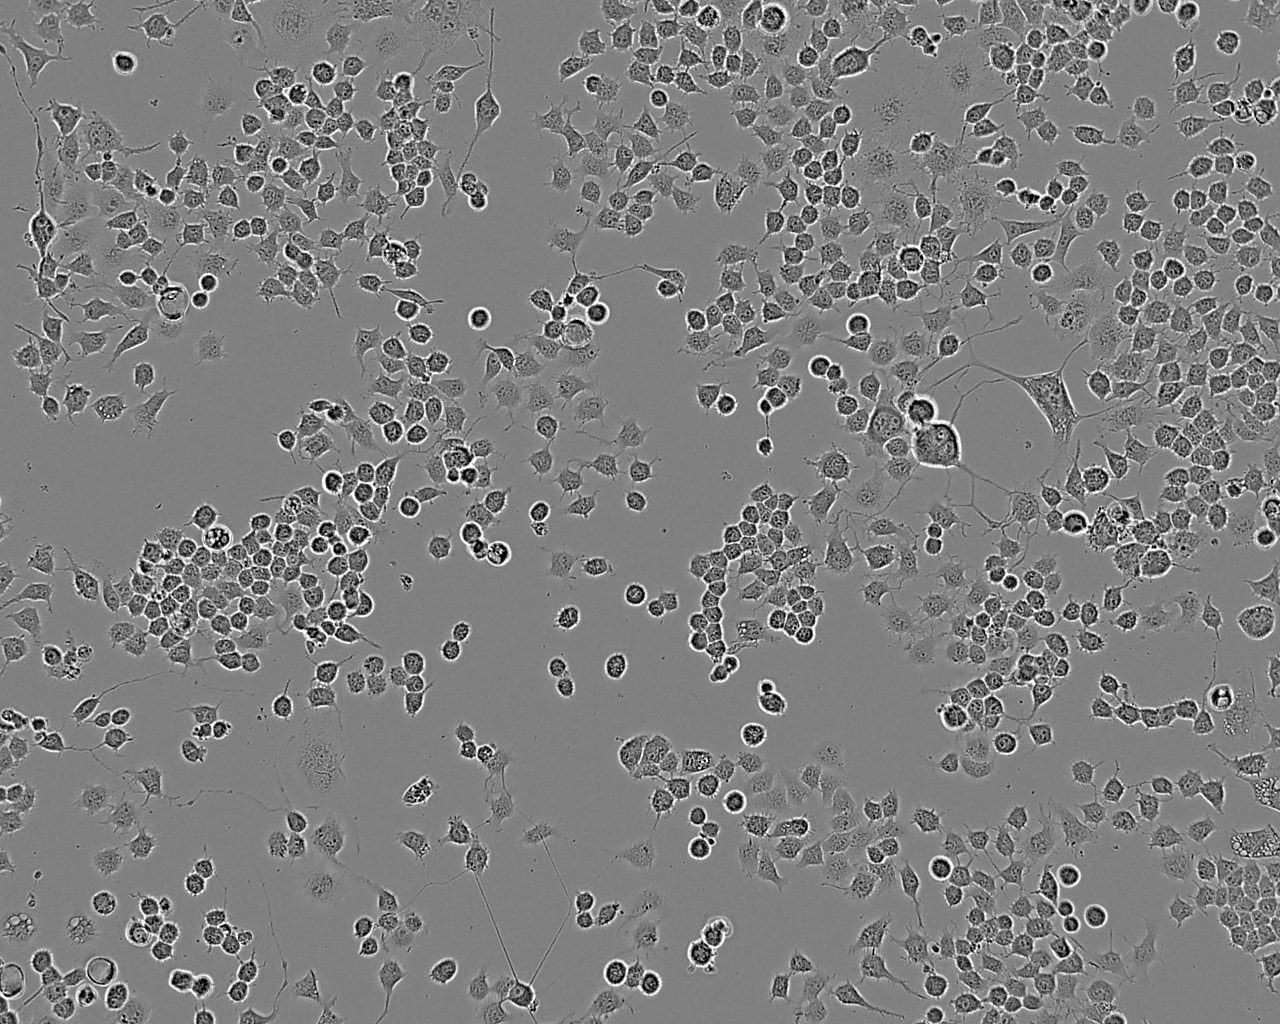 TE-9 Cells|人食管癌细胞系